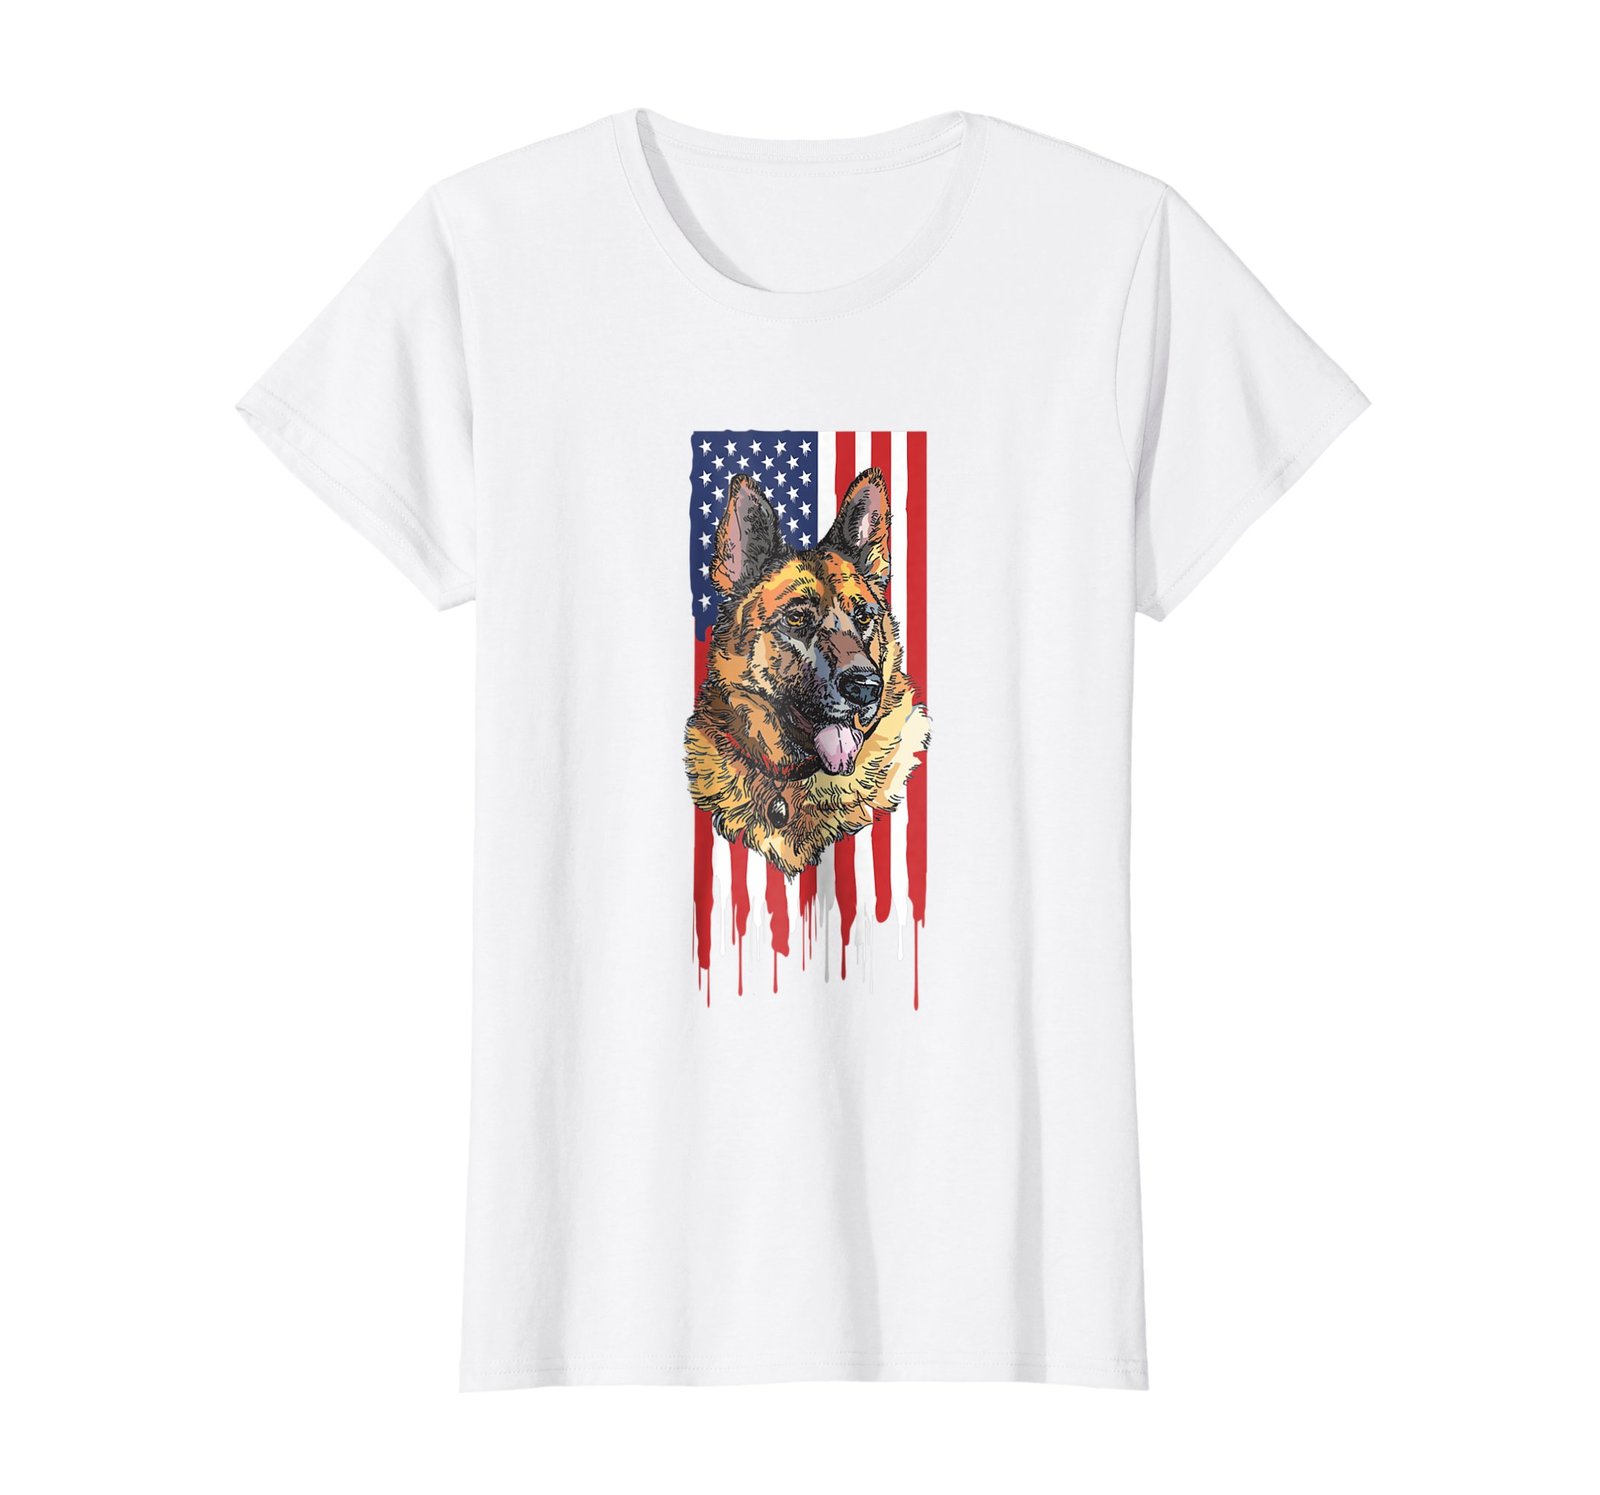 Funny Shirts - German Shepherd Dogs Head on American USA Flag Wowen